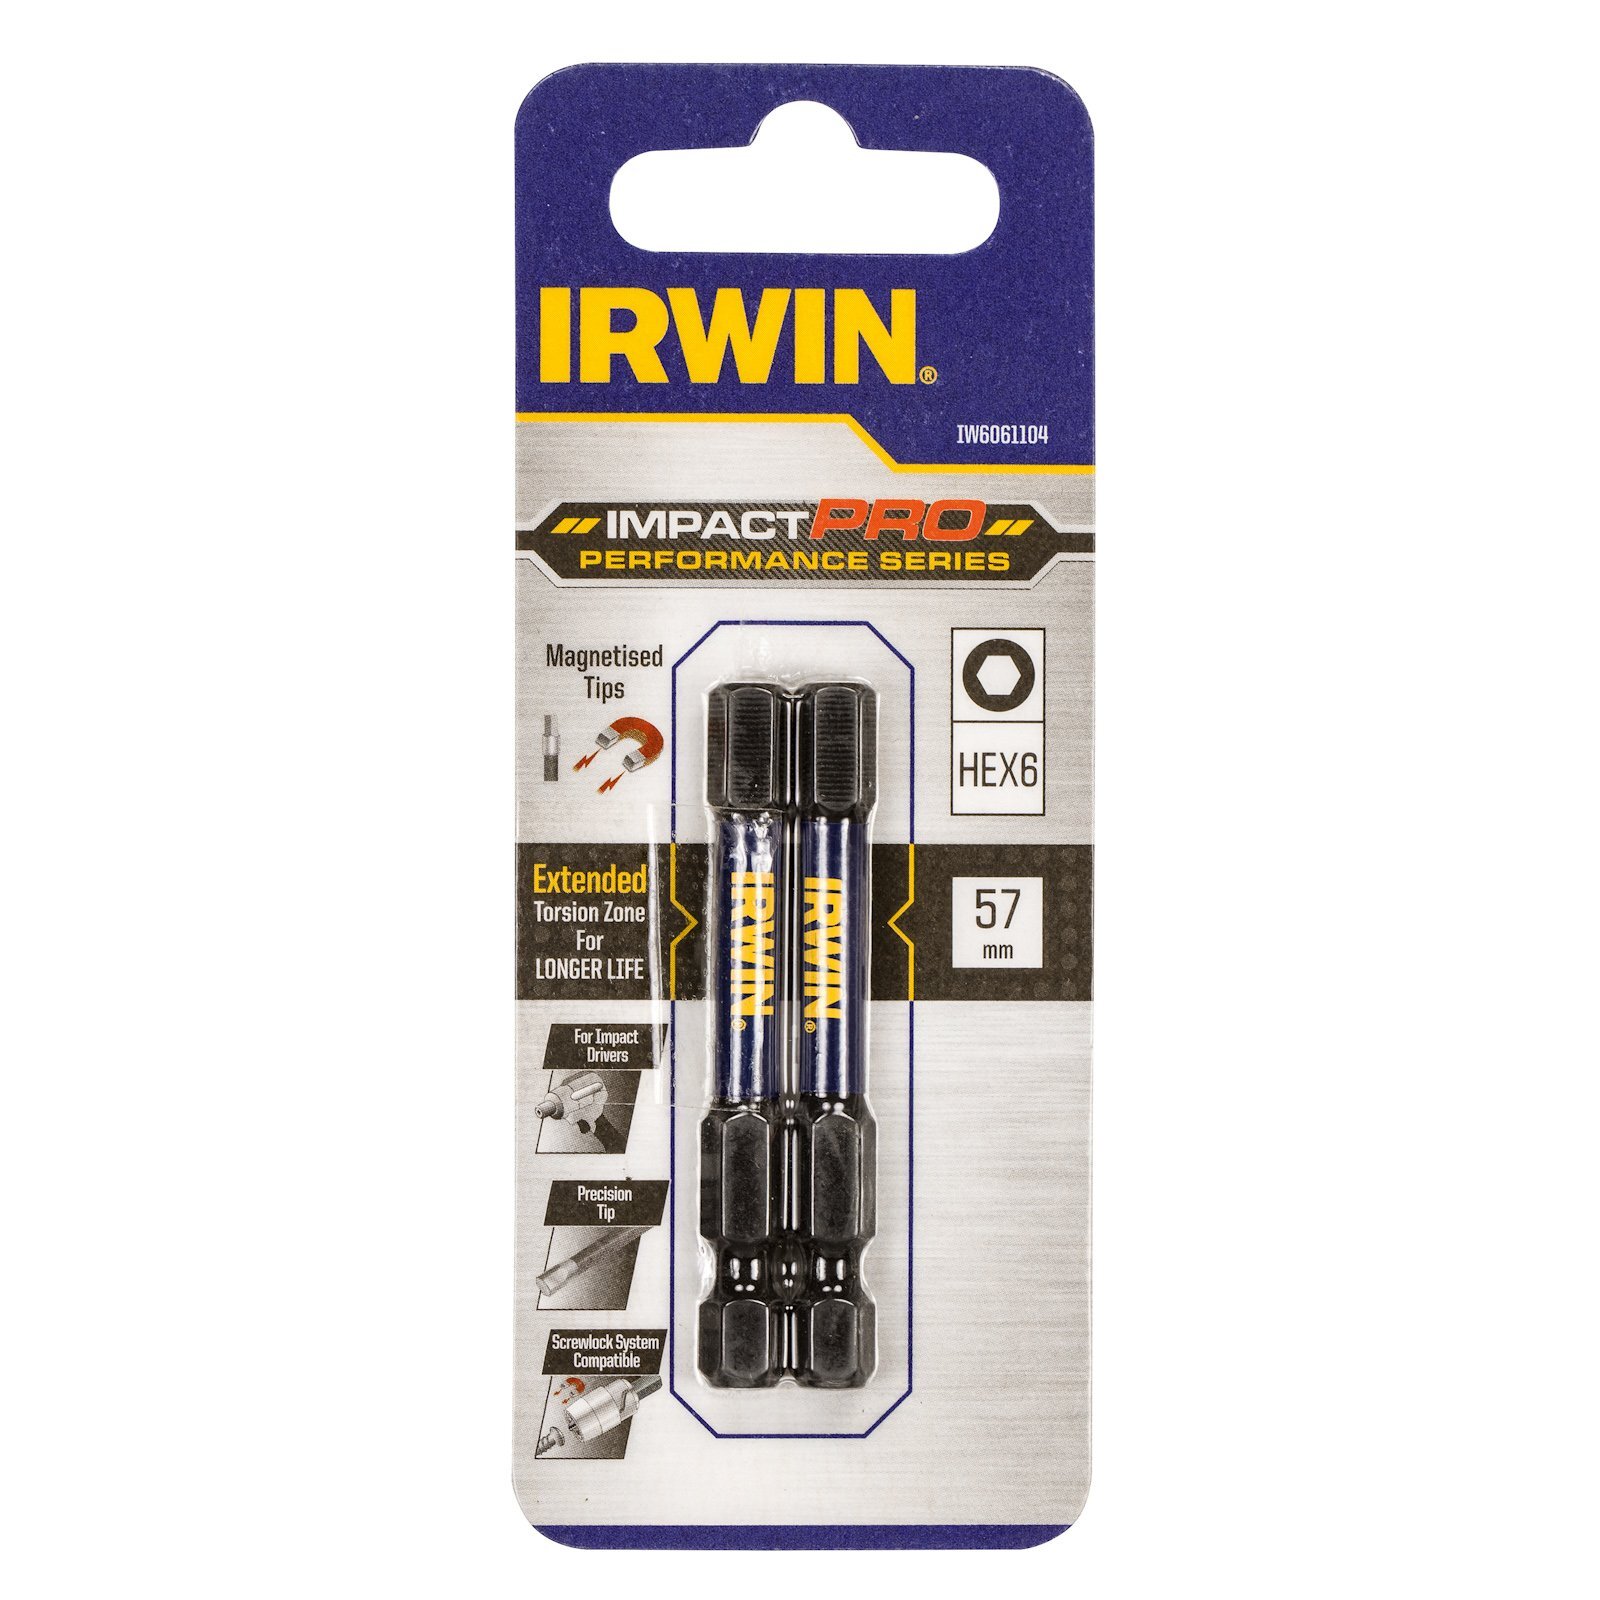 Irwin Impact Pro Performance 57mm Hex 6 - 2 Pack